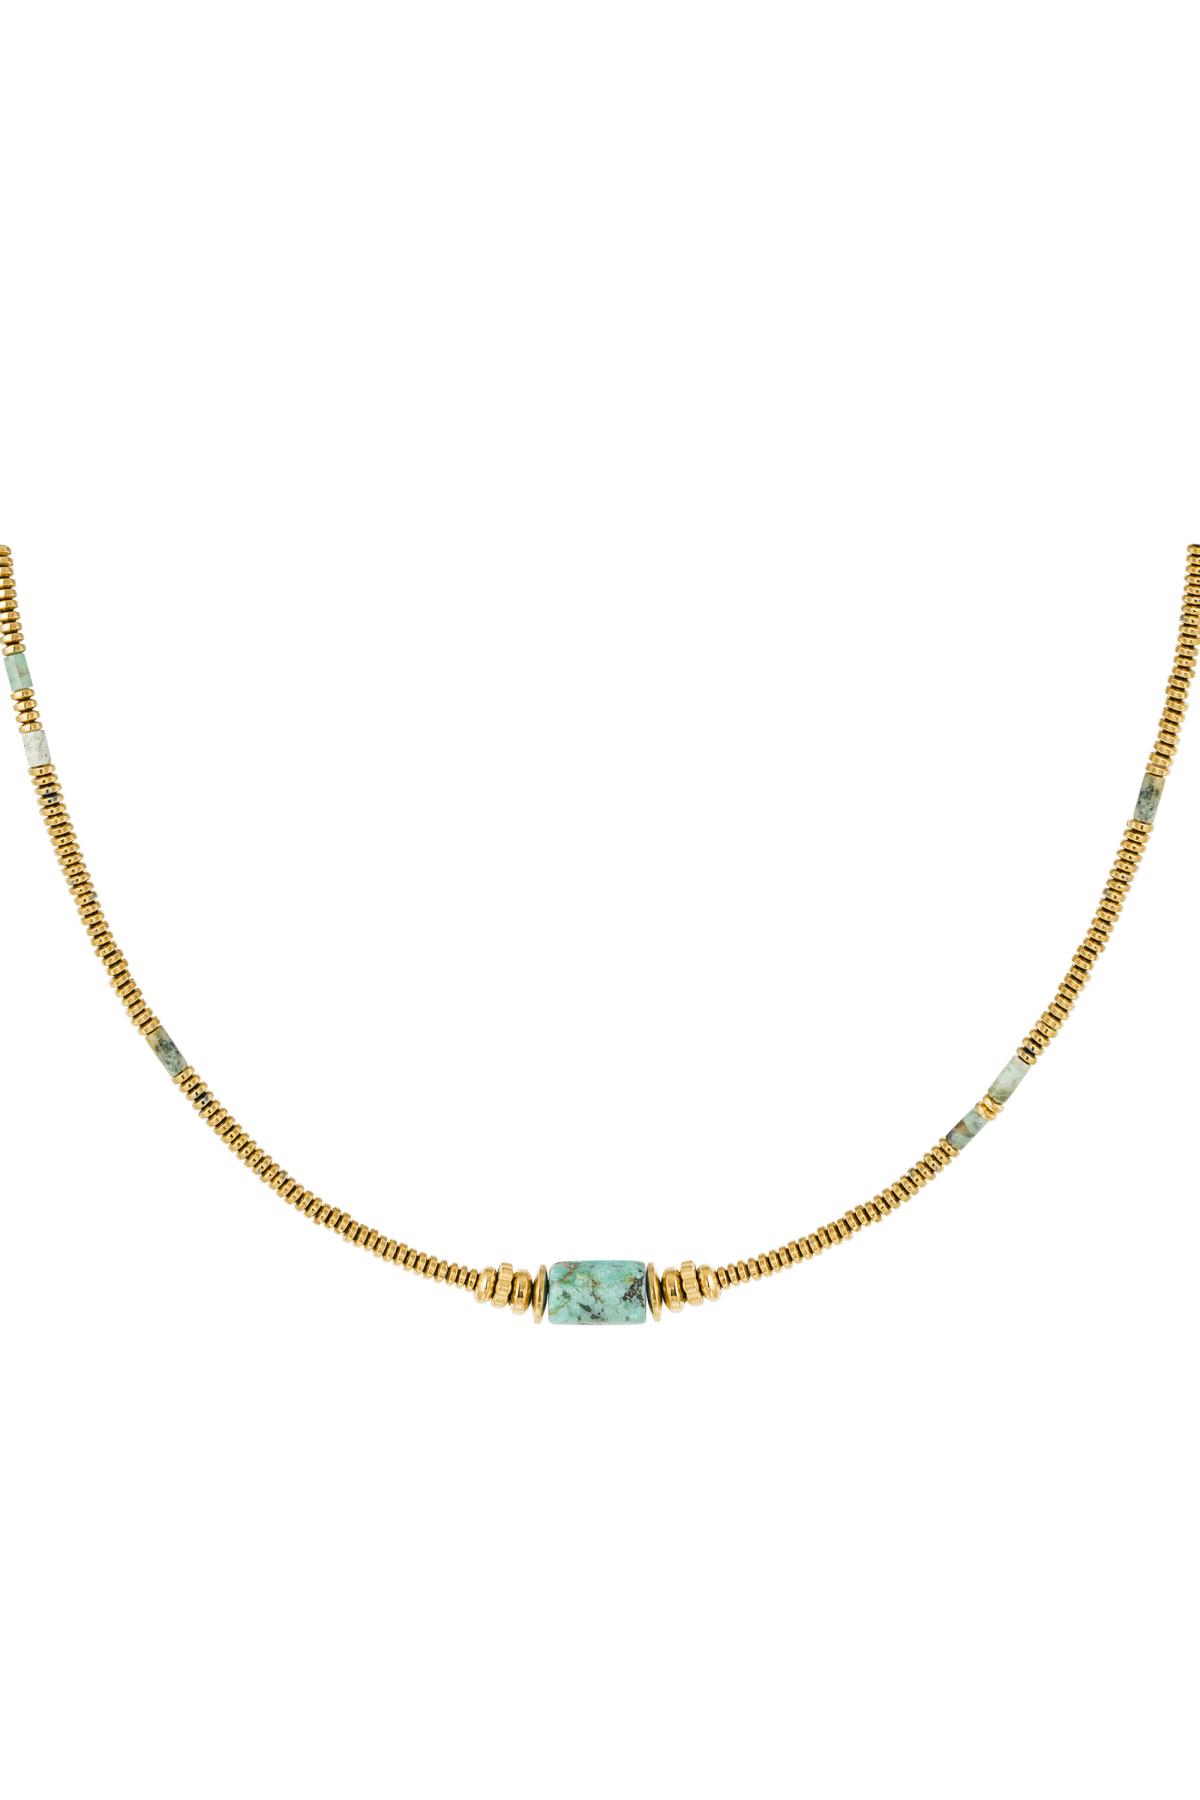 Collar abalorios finos con charm - colección Piedras Naturales Verde &amp; Oro Acero inoxidable